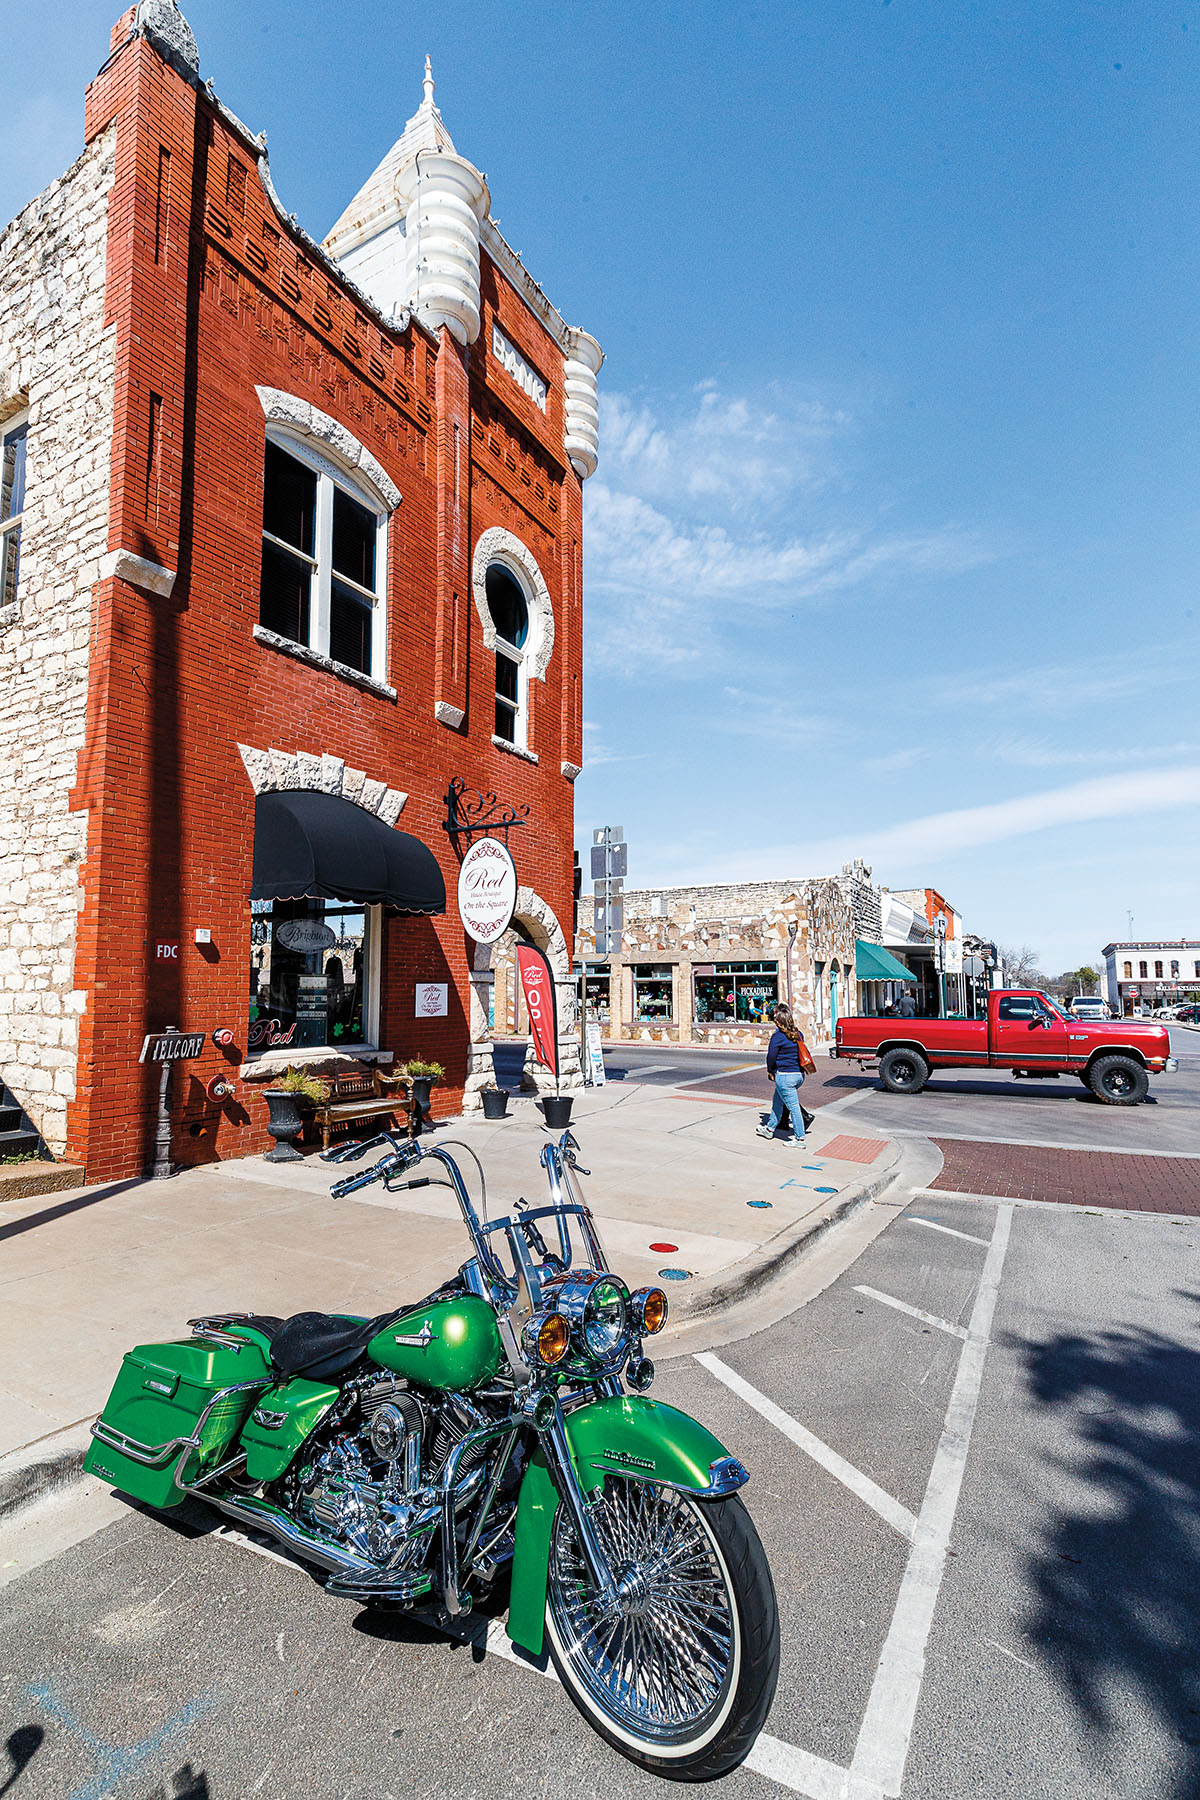 Green Harley Davidson motorcycle on street near downtown square, Granbury, Texas, USA.